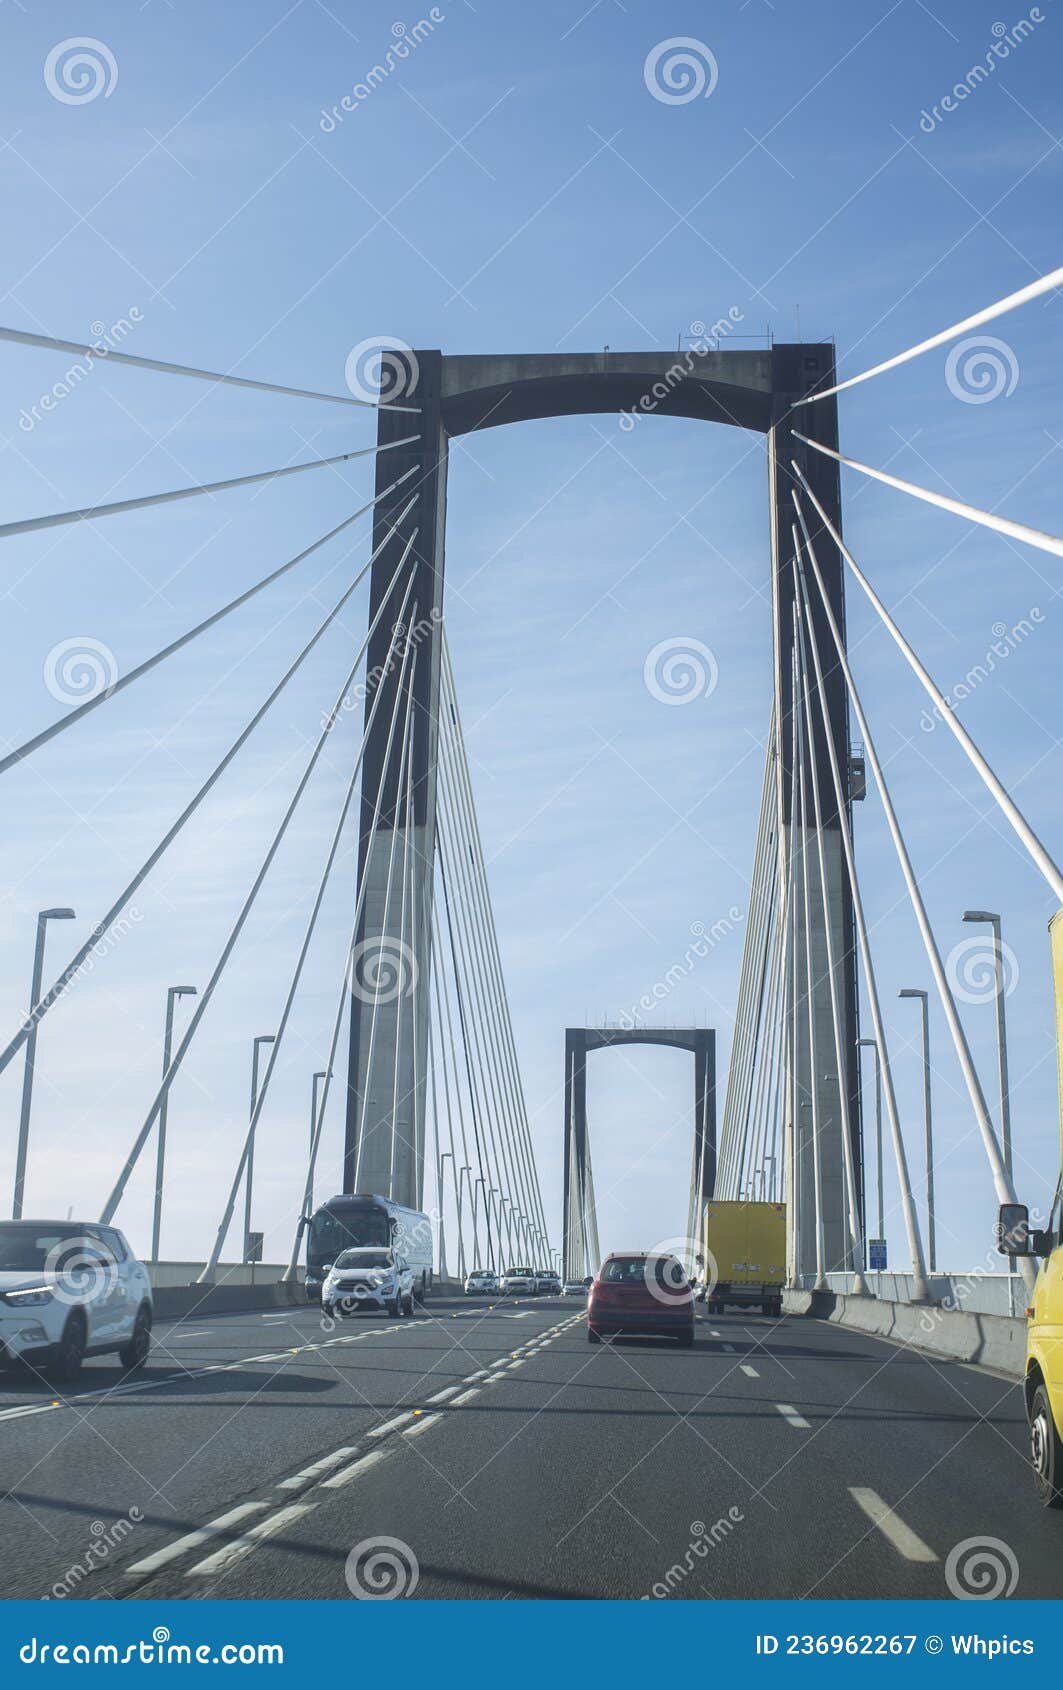 quinto centenario bridge taken with daily traffic